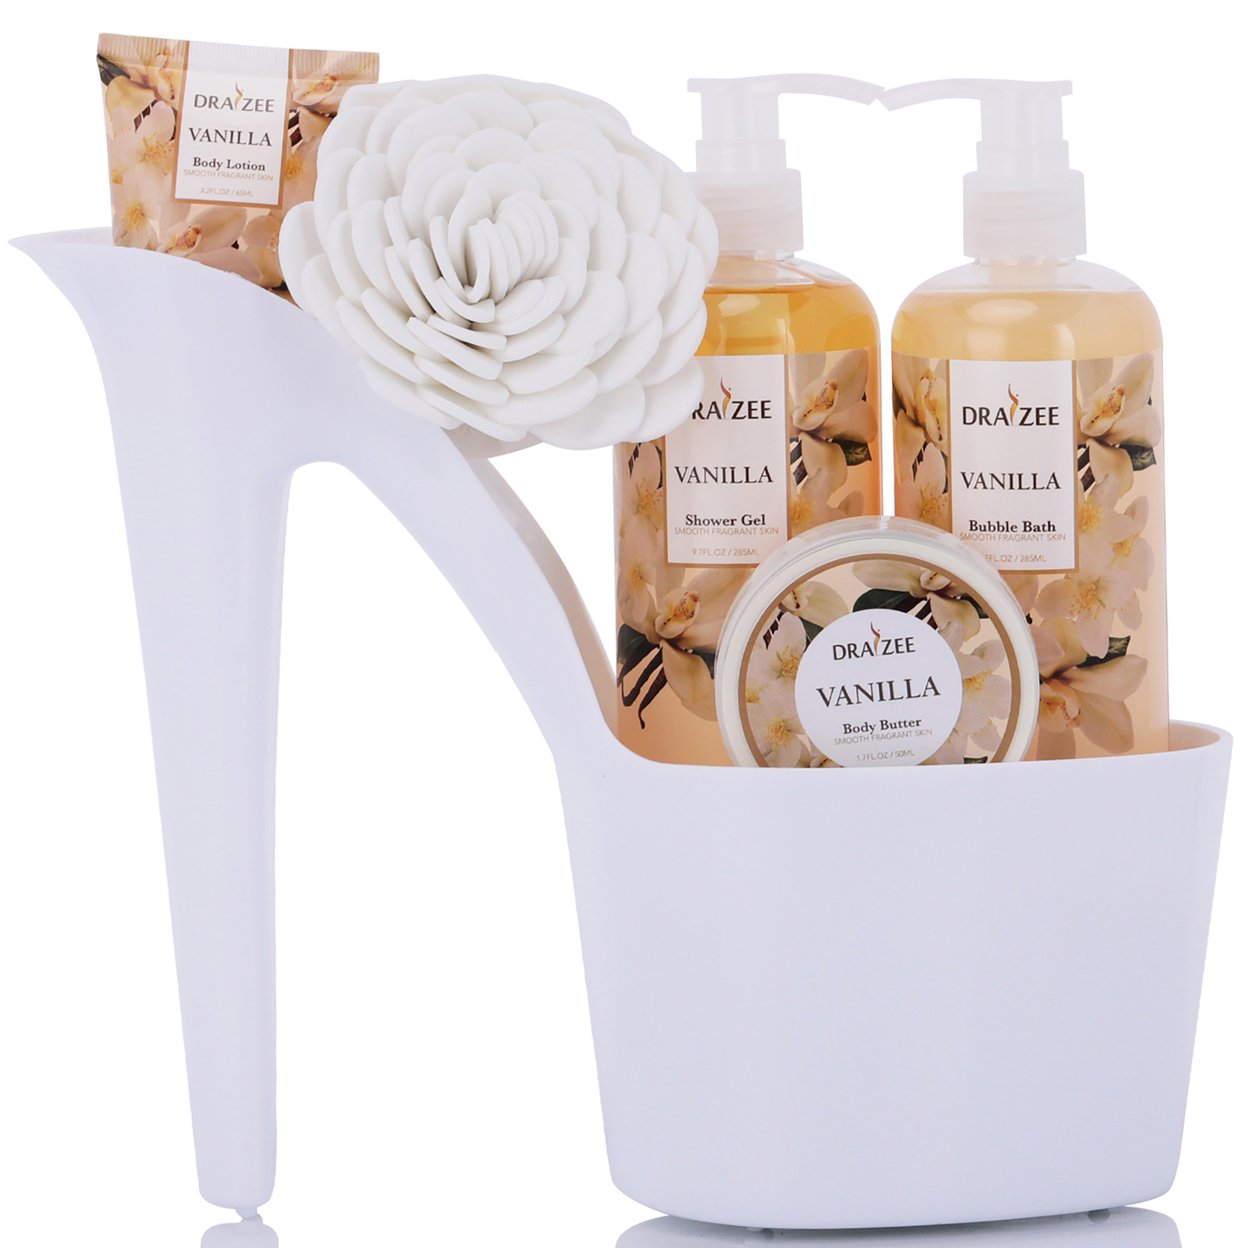 Draizee Heel Shoe Spa Gift Set Vanilla Scented Bath Essentials Gift Basket W Shower Gel, Bubble Bath, Body Butter, Body Lotion & Bath Puff